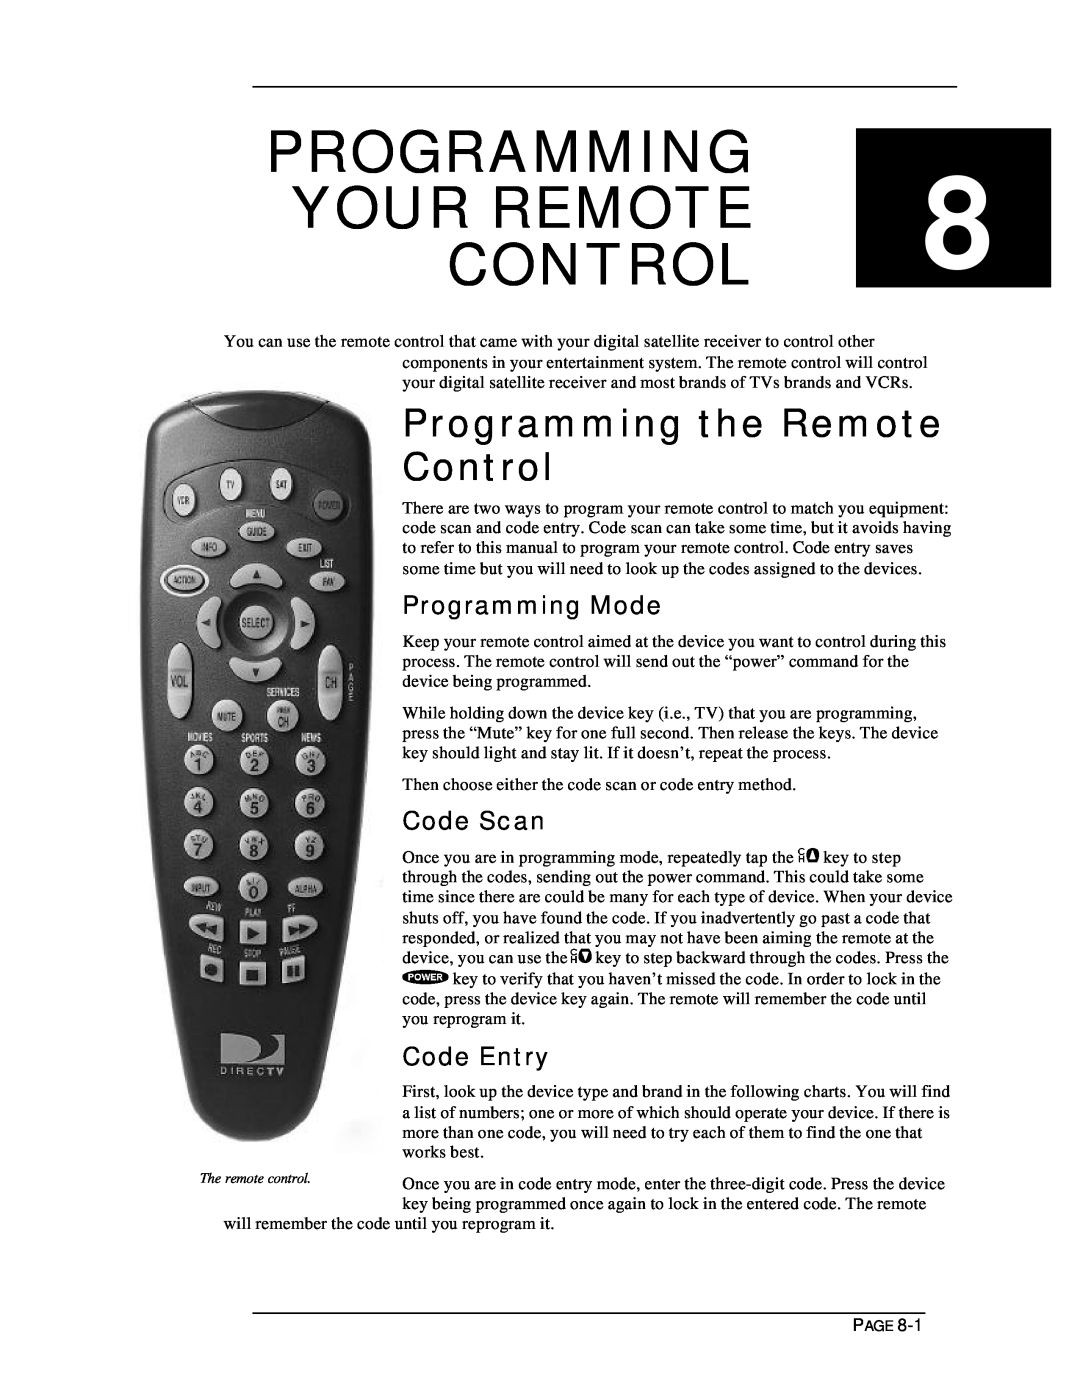 DirecTV HIRD-D11, HIRD-D01 PROGRAMMING YOUR REMOTE 8 CONTROL, Programming the Remote Control, Programming Mode, Code Scan 